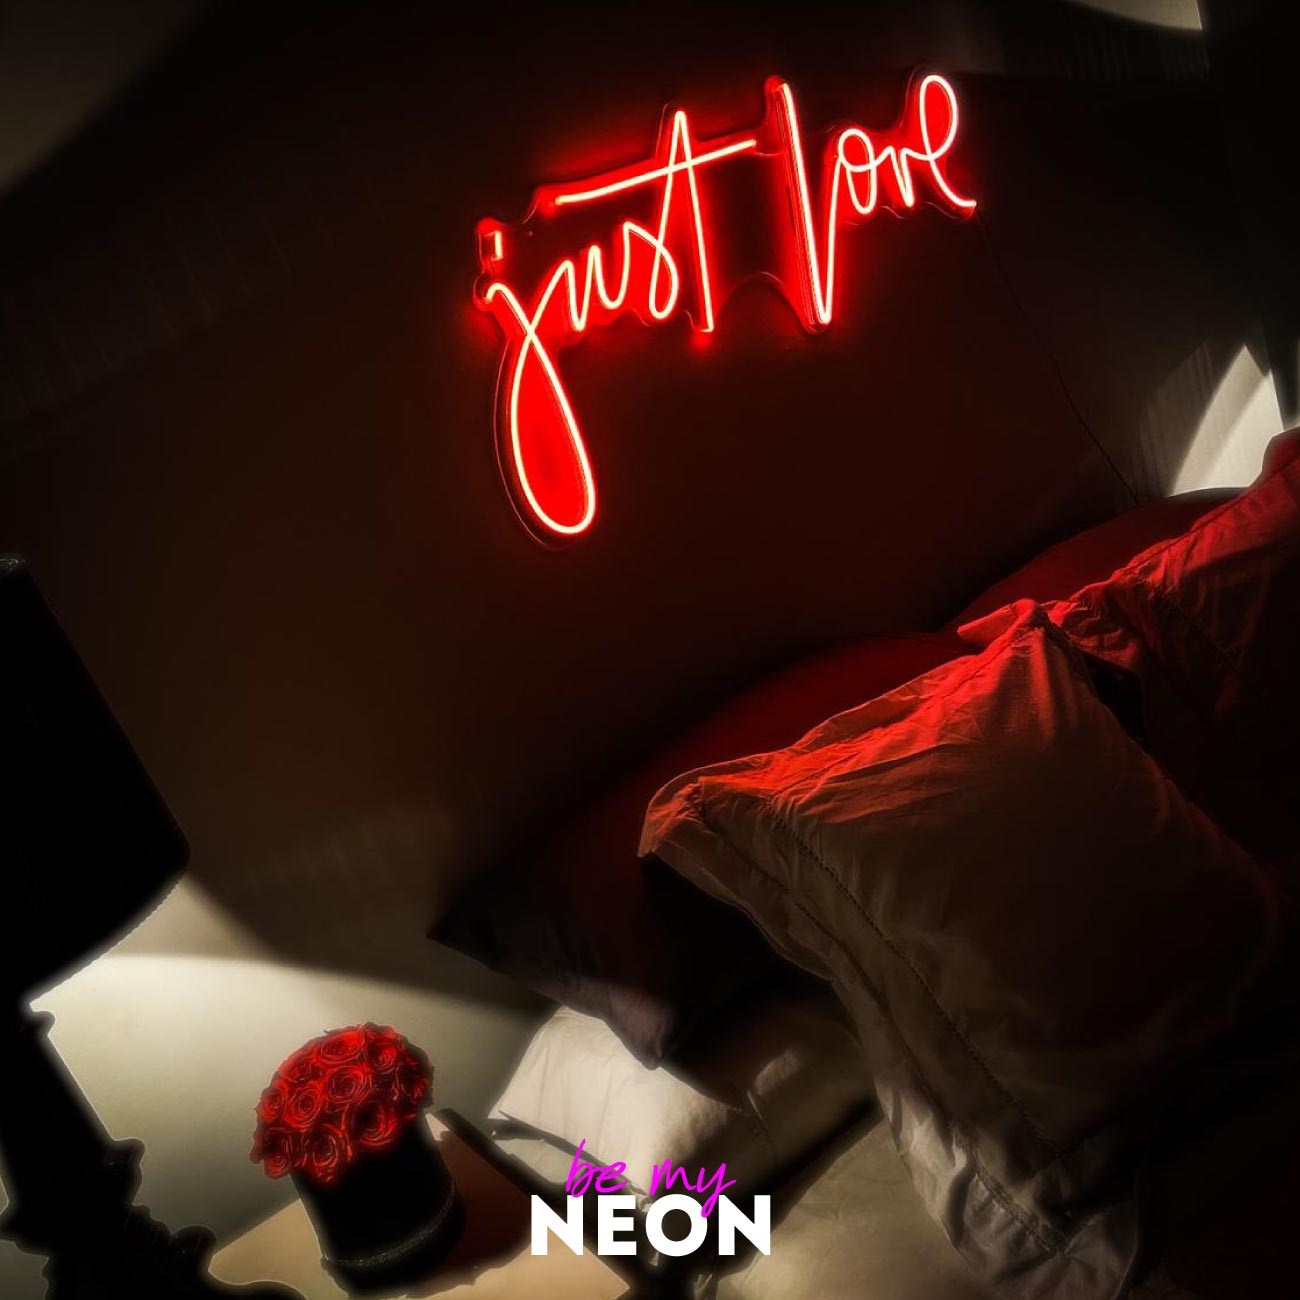 "just love." Leuchtmotiv aus LED Neon